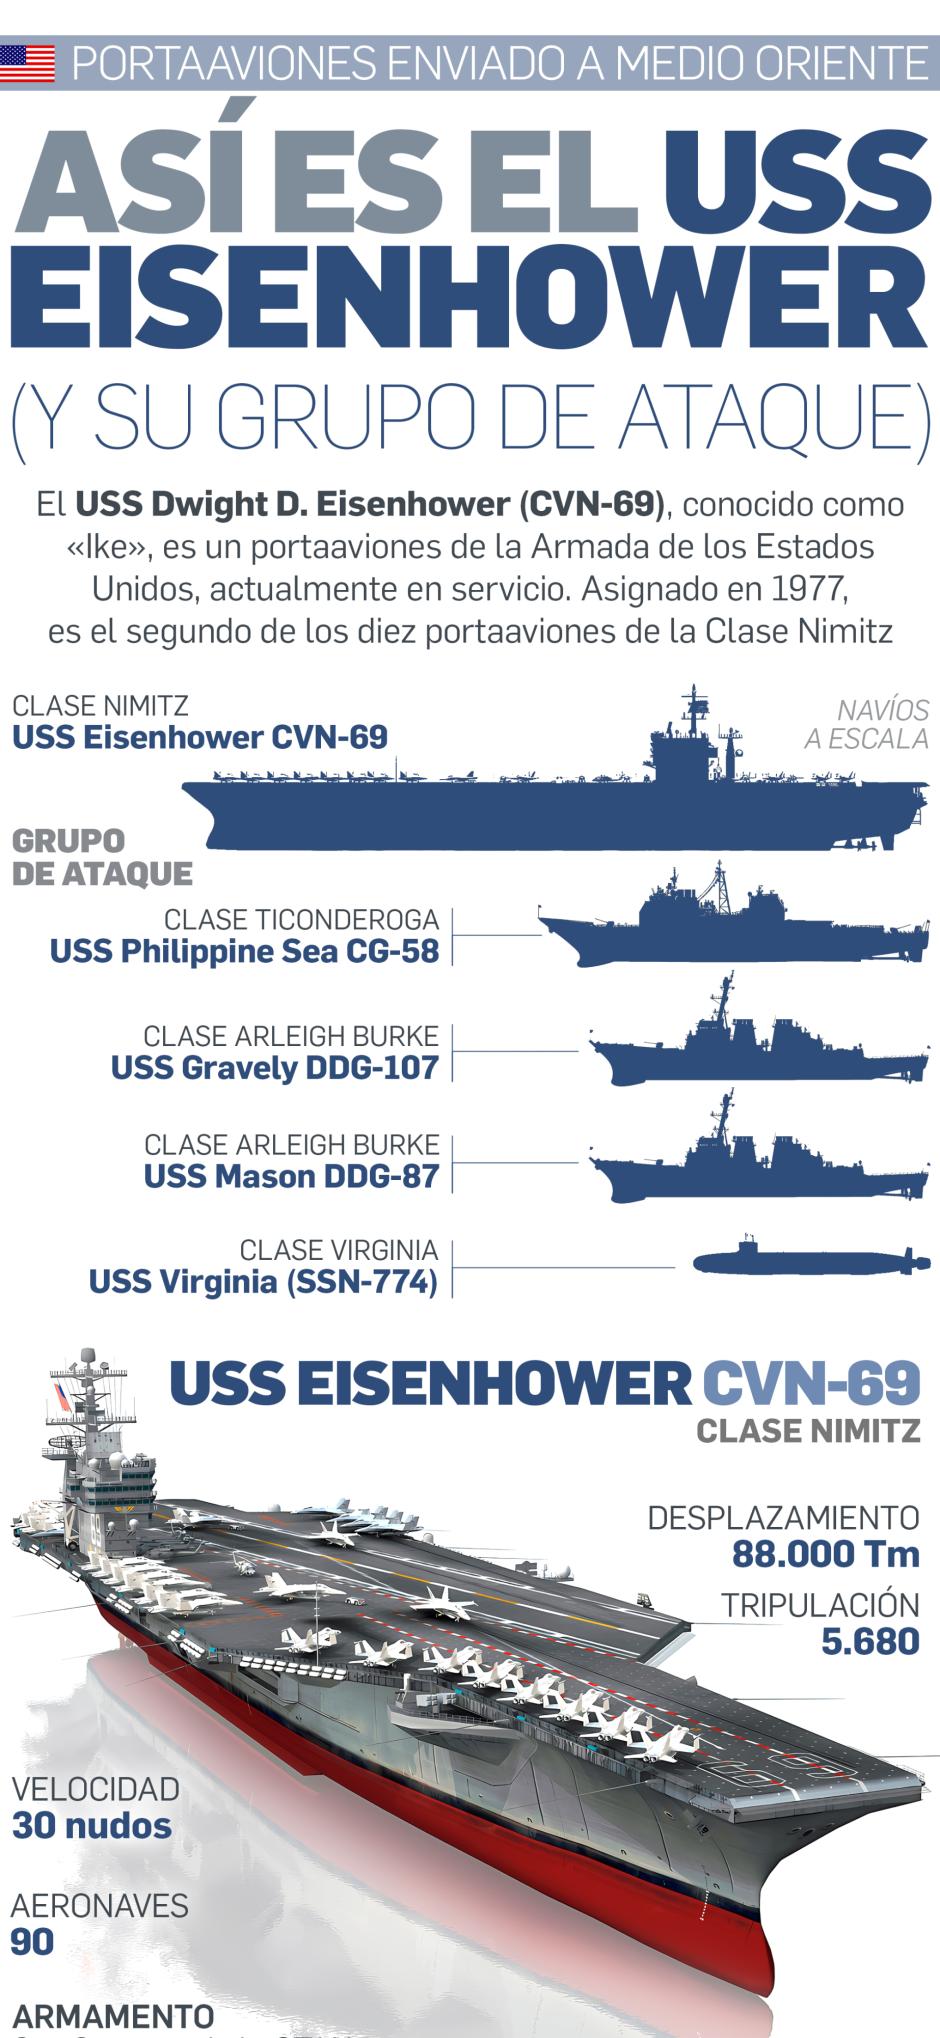 El portaaviones USS Dwight D. Eisenhower